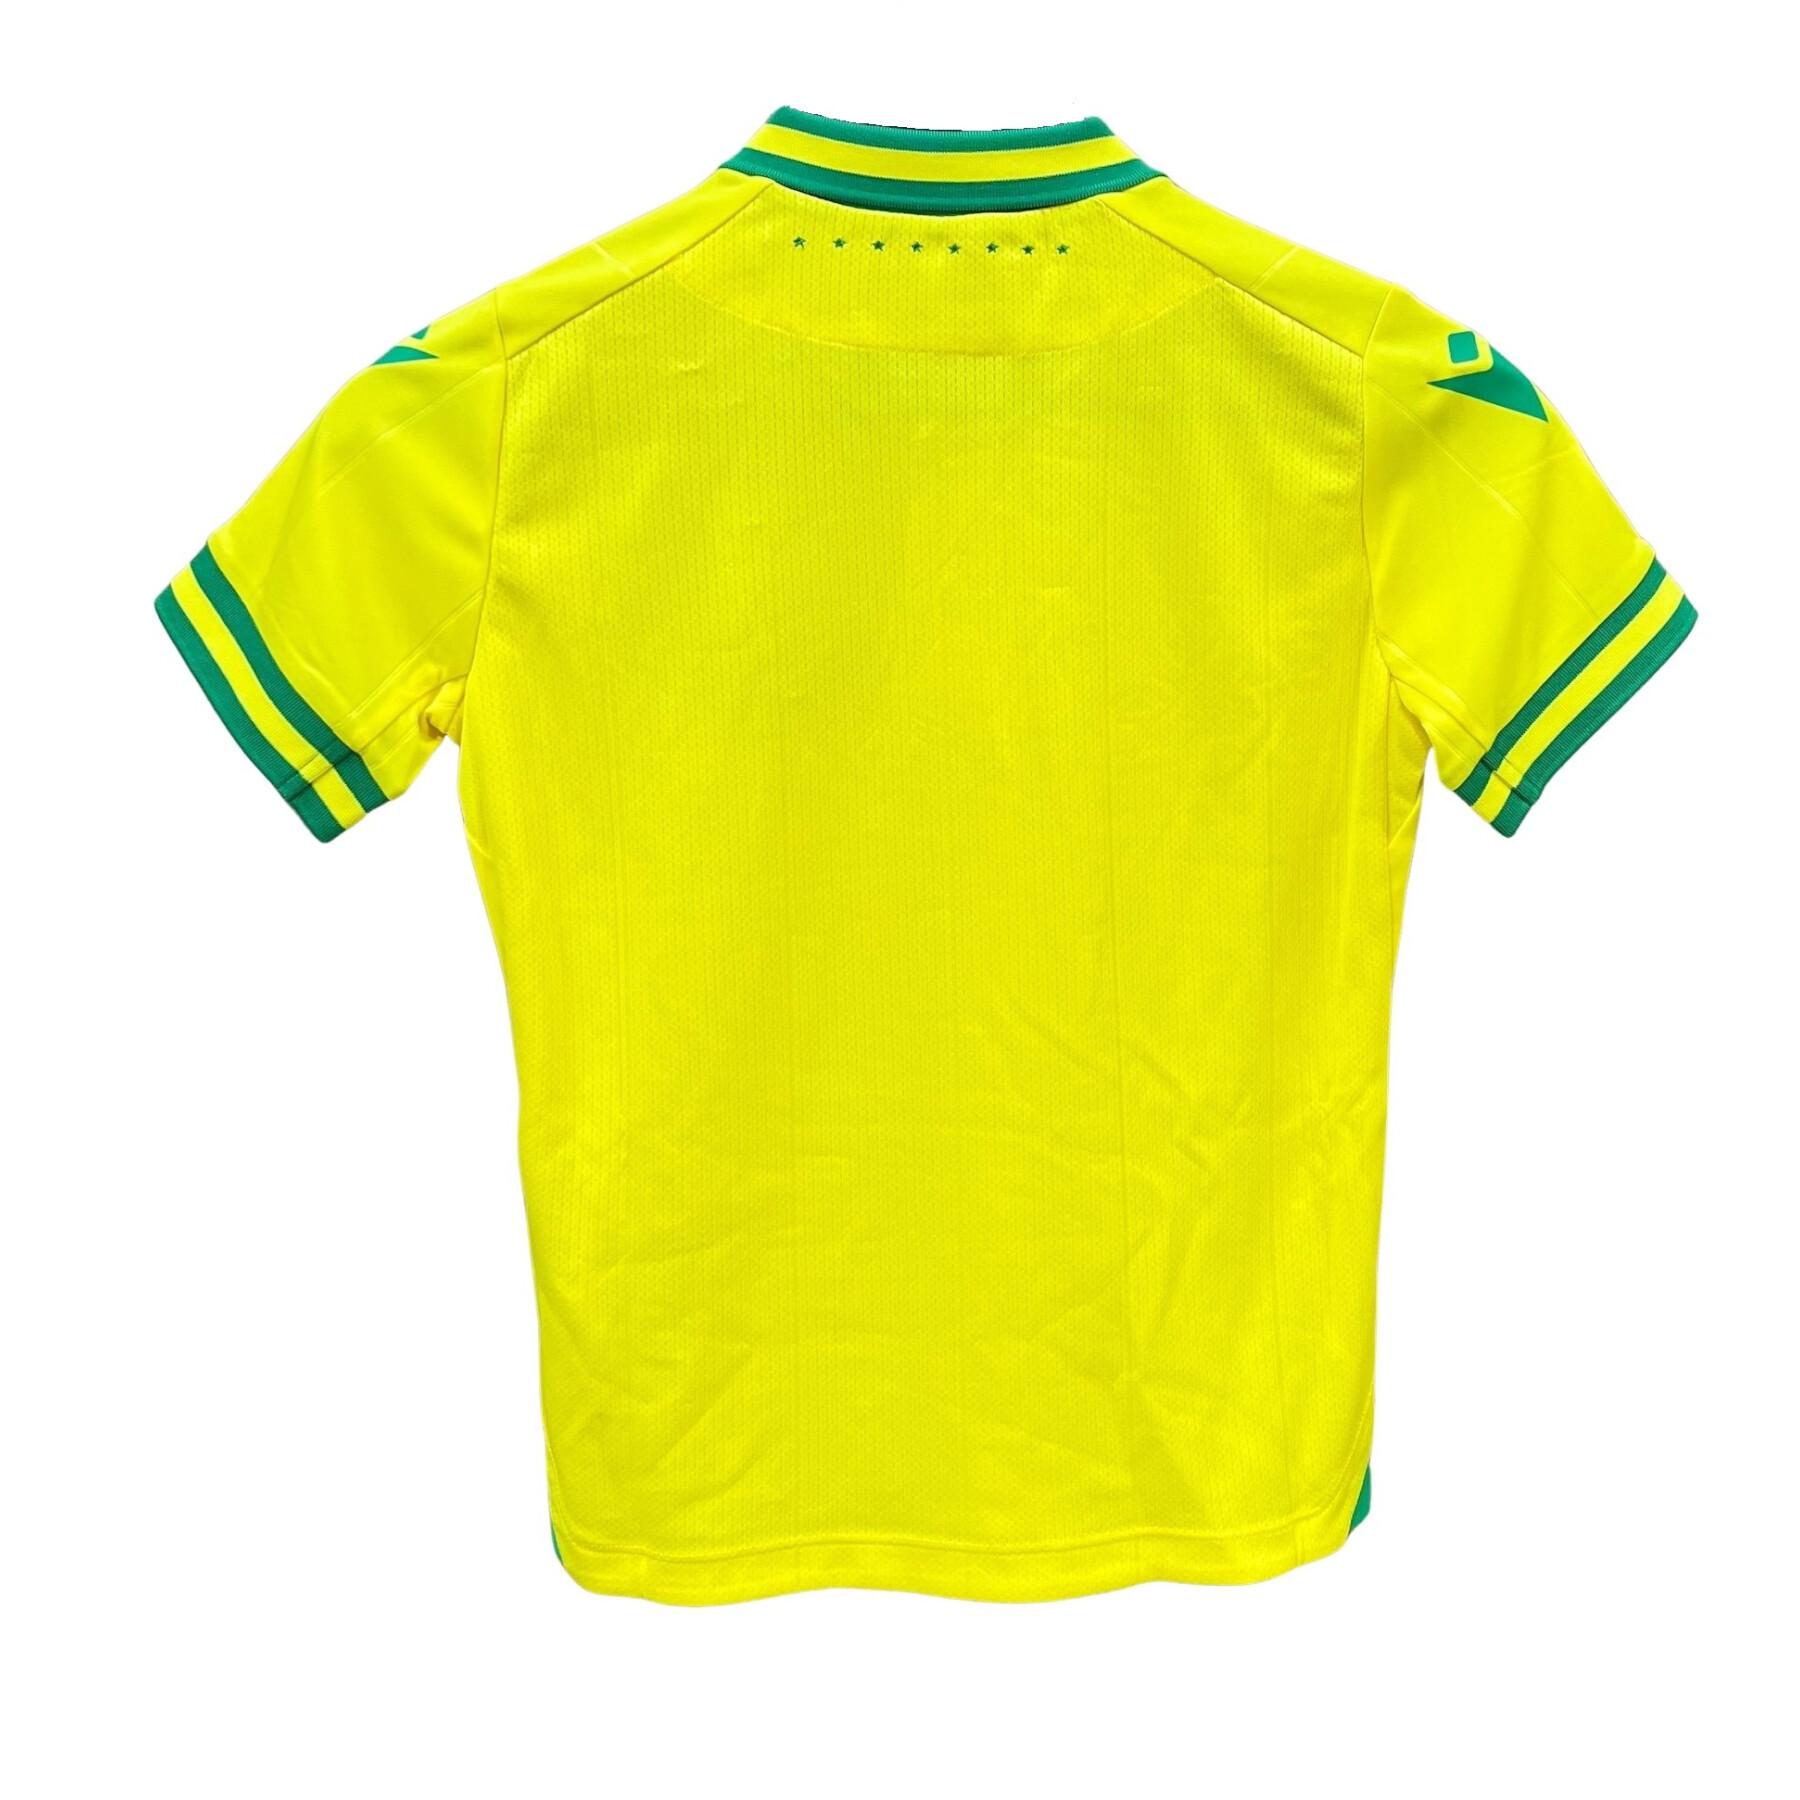 Camiseta primera equipación Authentic infantil FC Nantes 2023/24